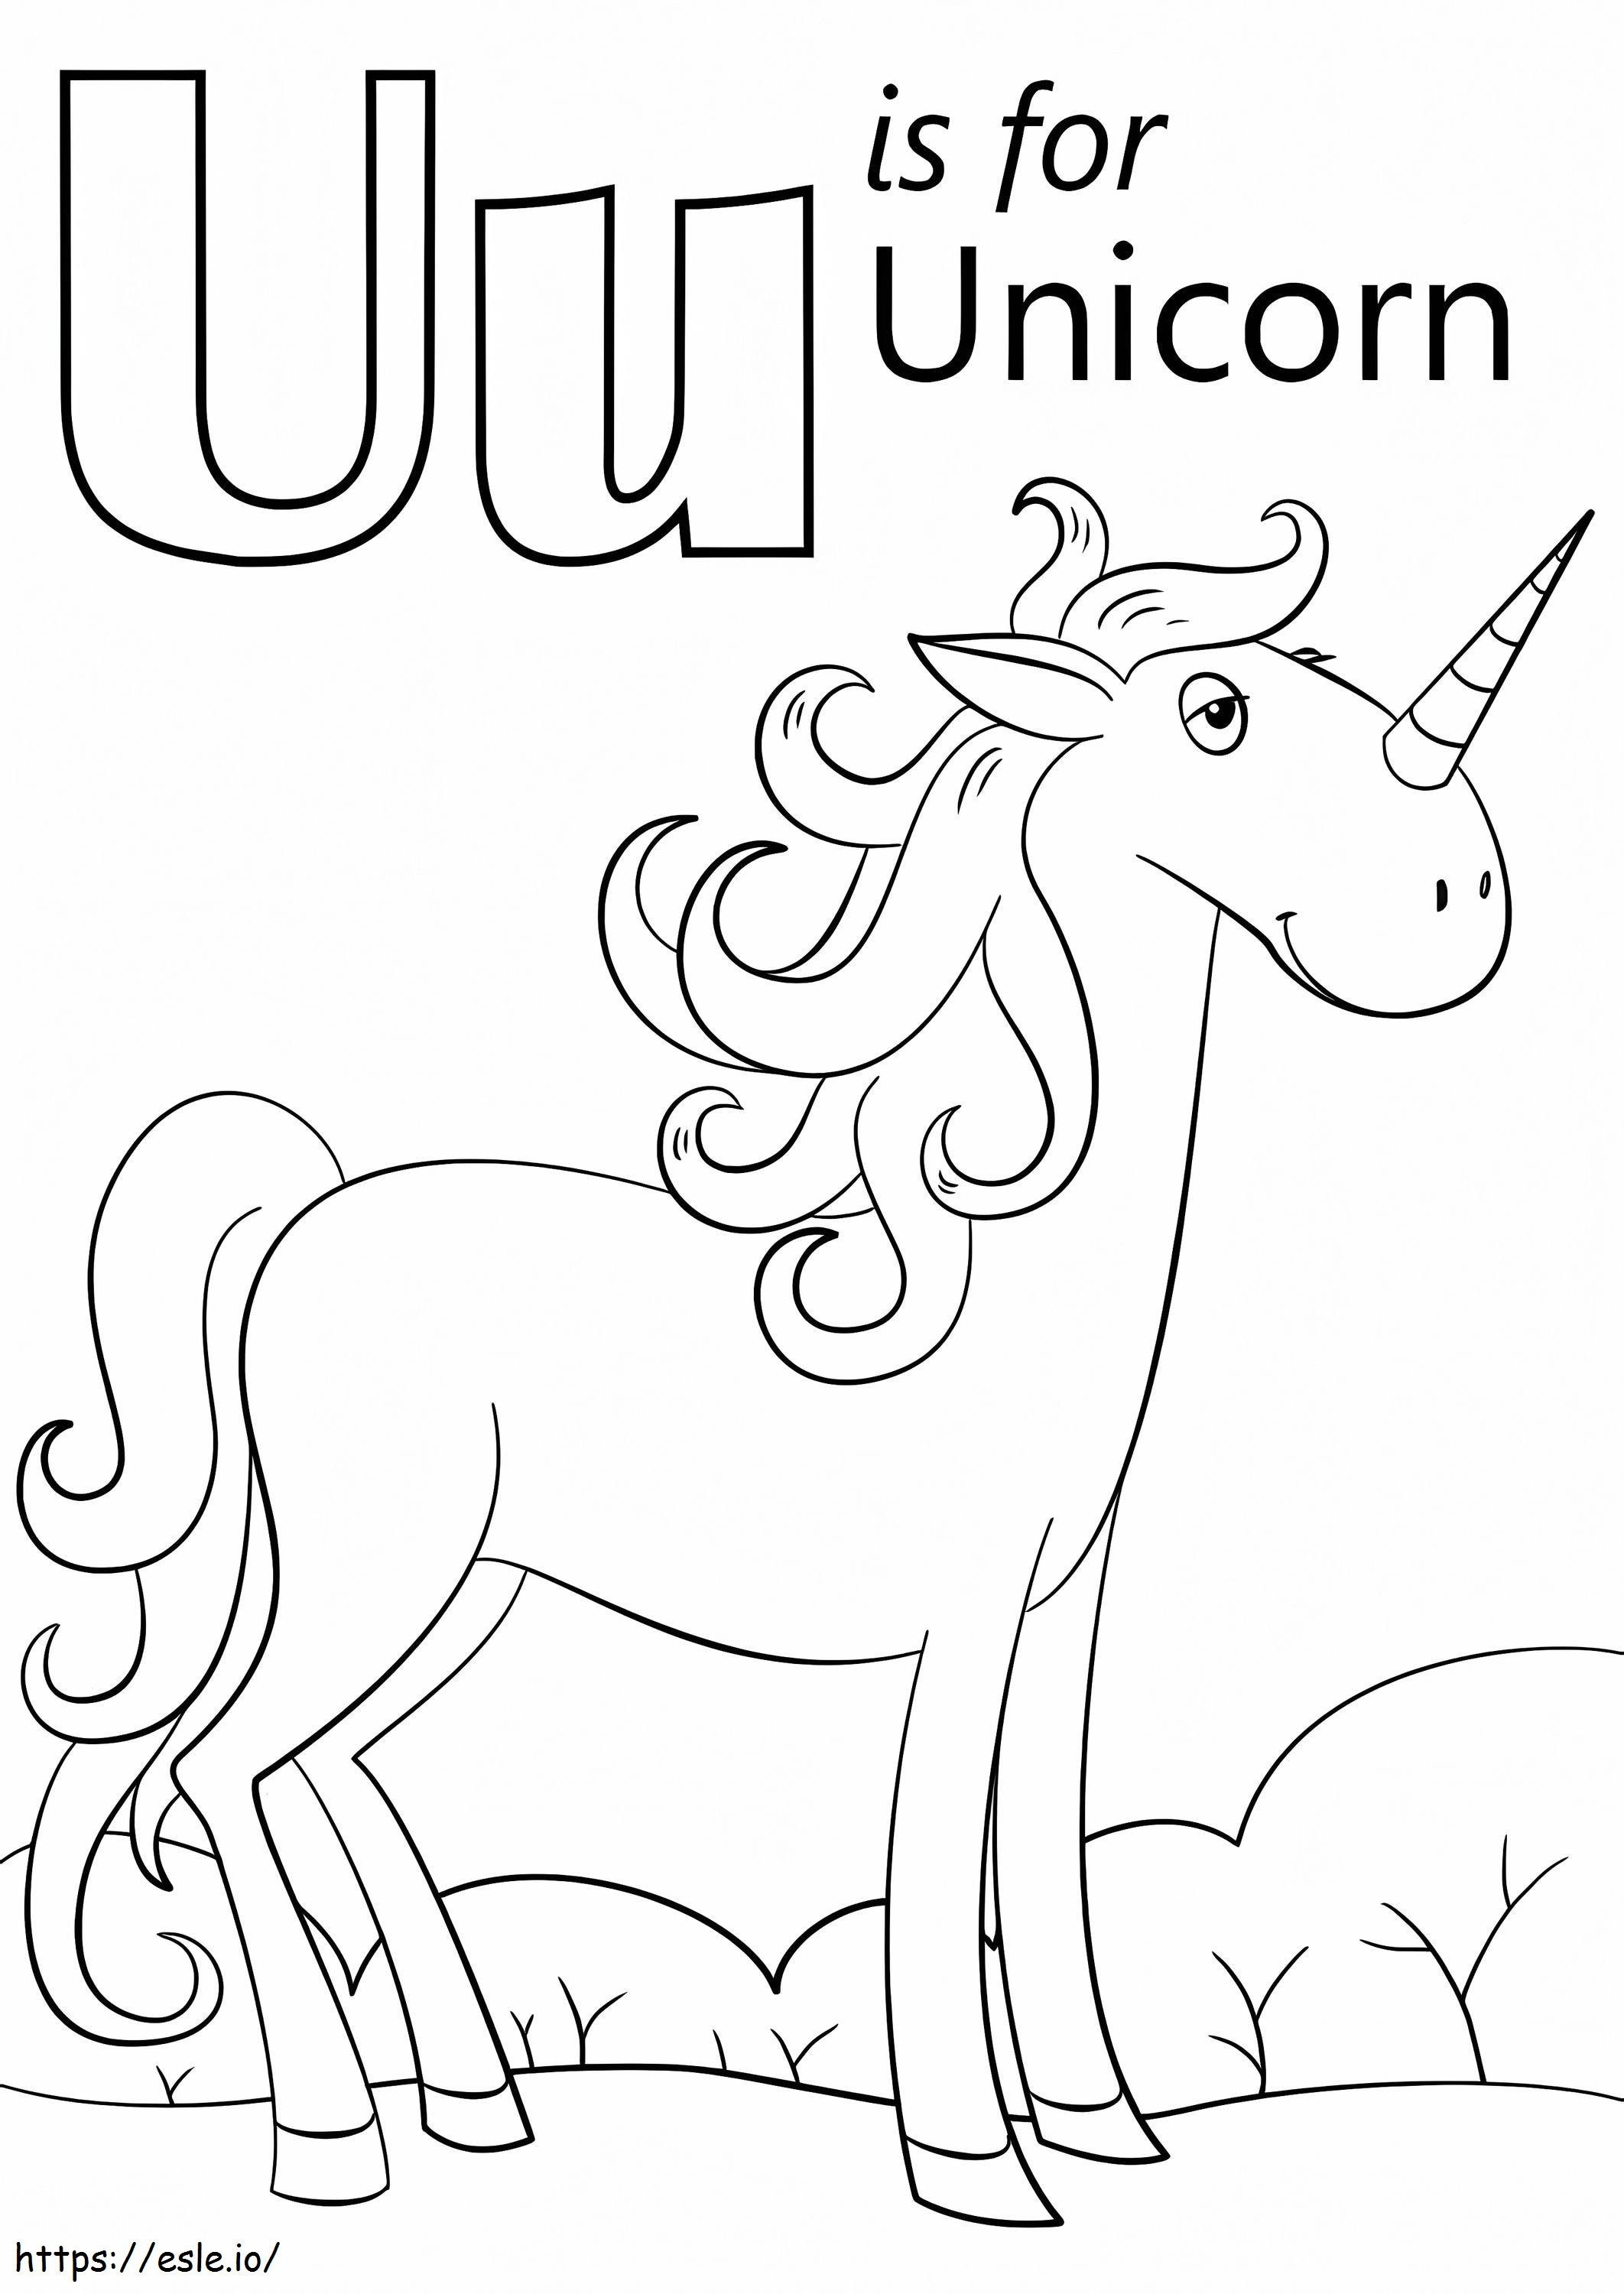 Unicorn Letter U coloring page